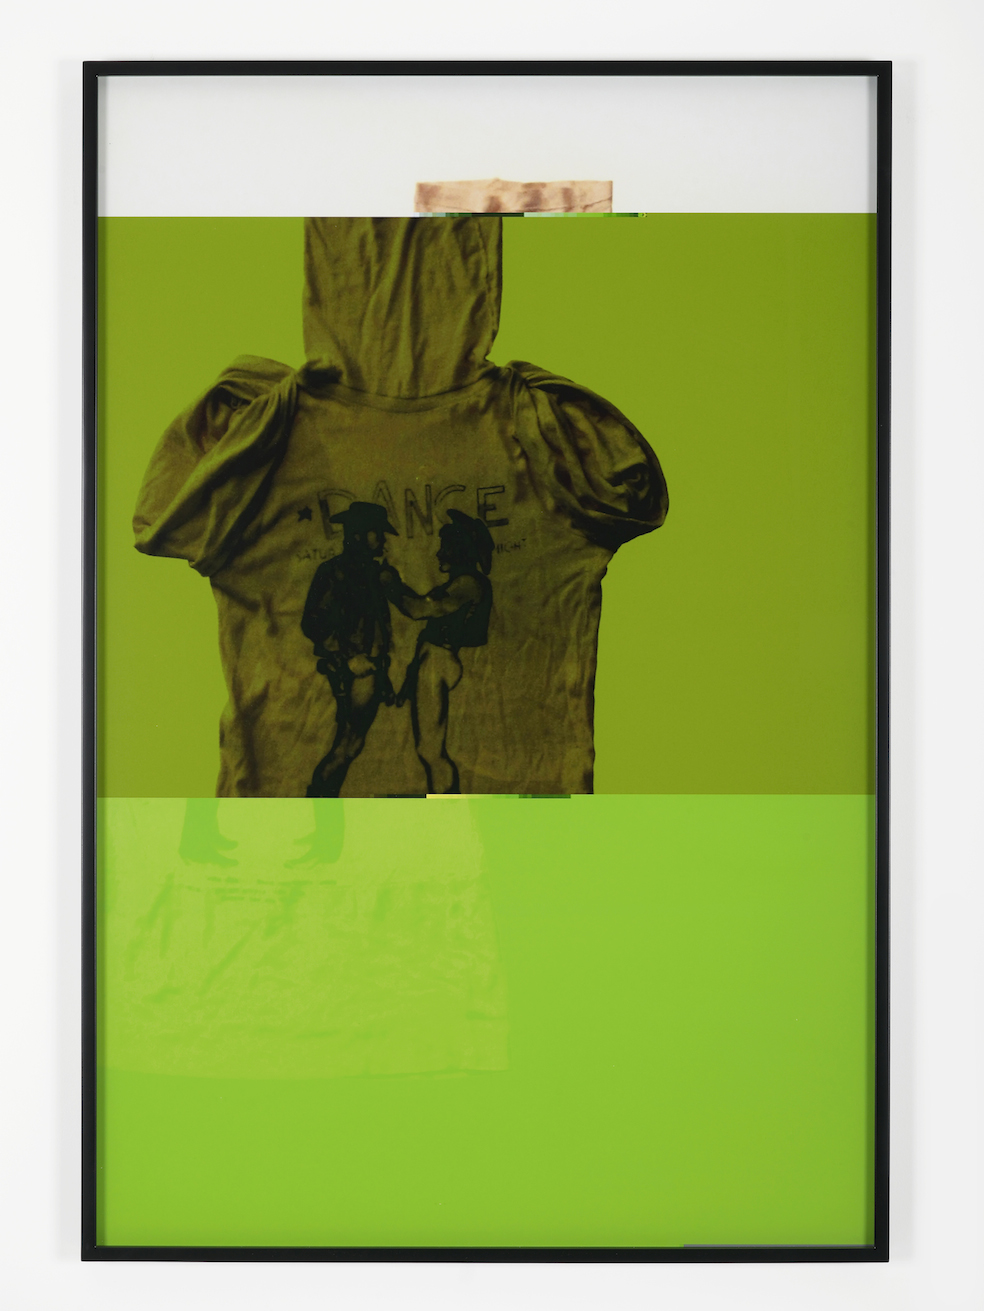     Nick Relph Alien Sauce 2014 Archival Pigment Print 106.6 x 71.1 cm / 42 x 28 in 